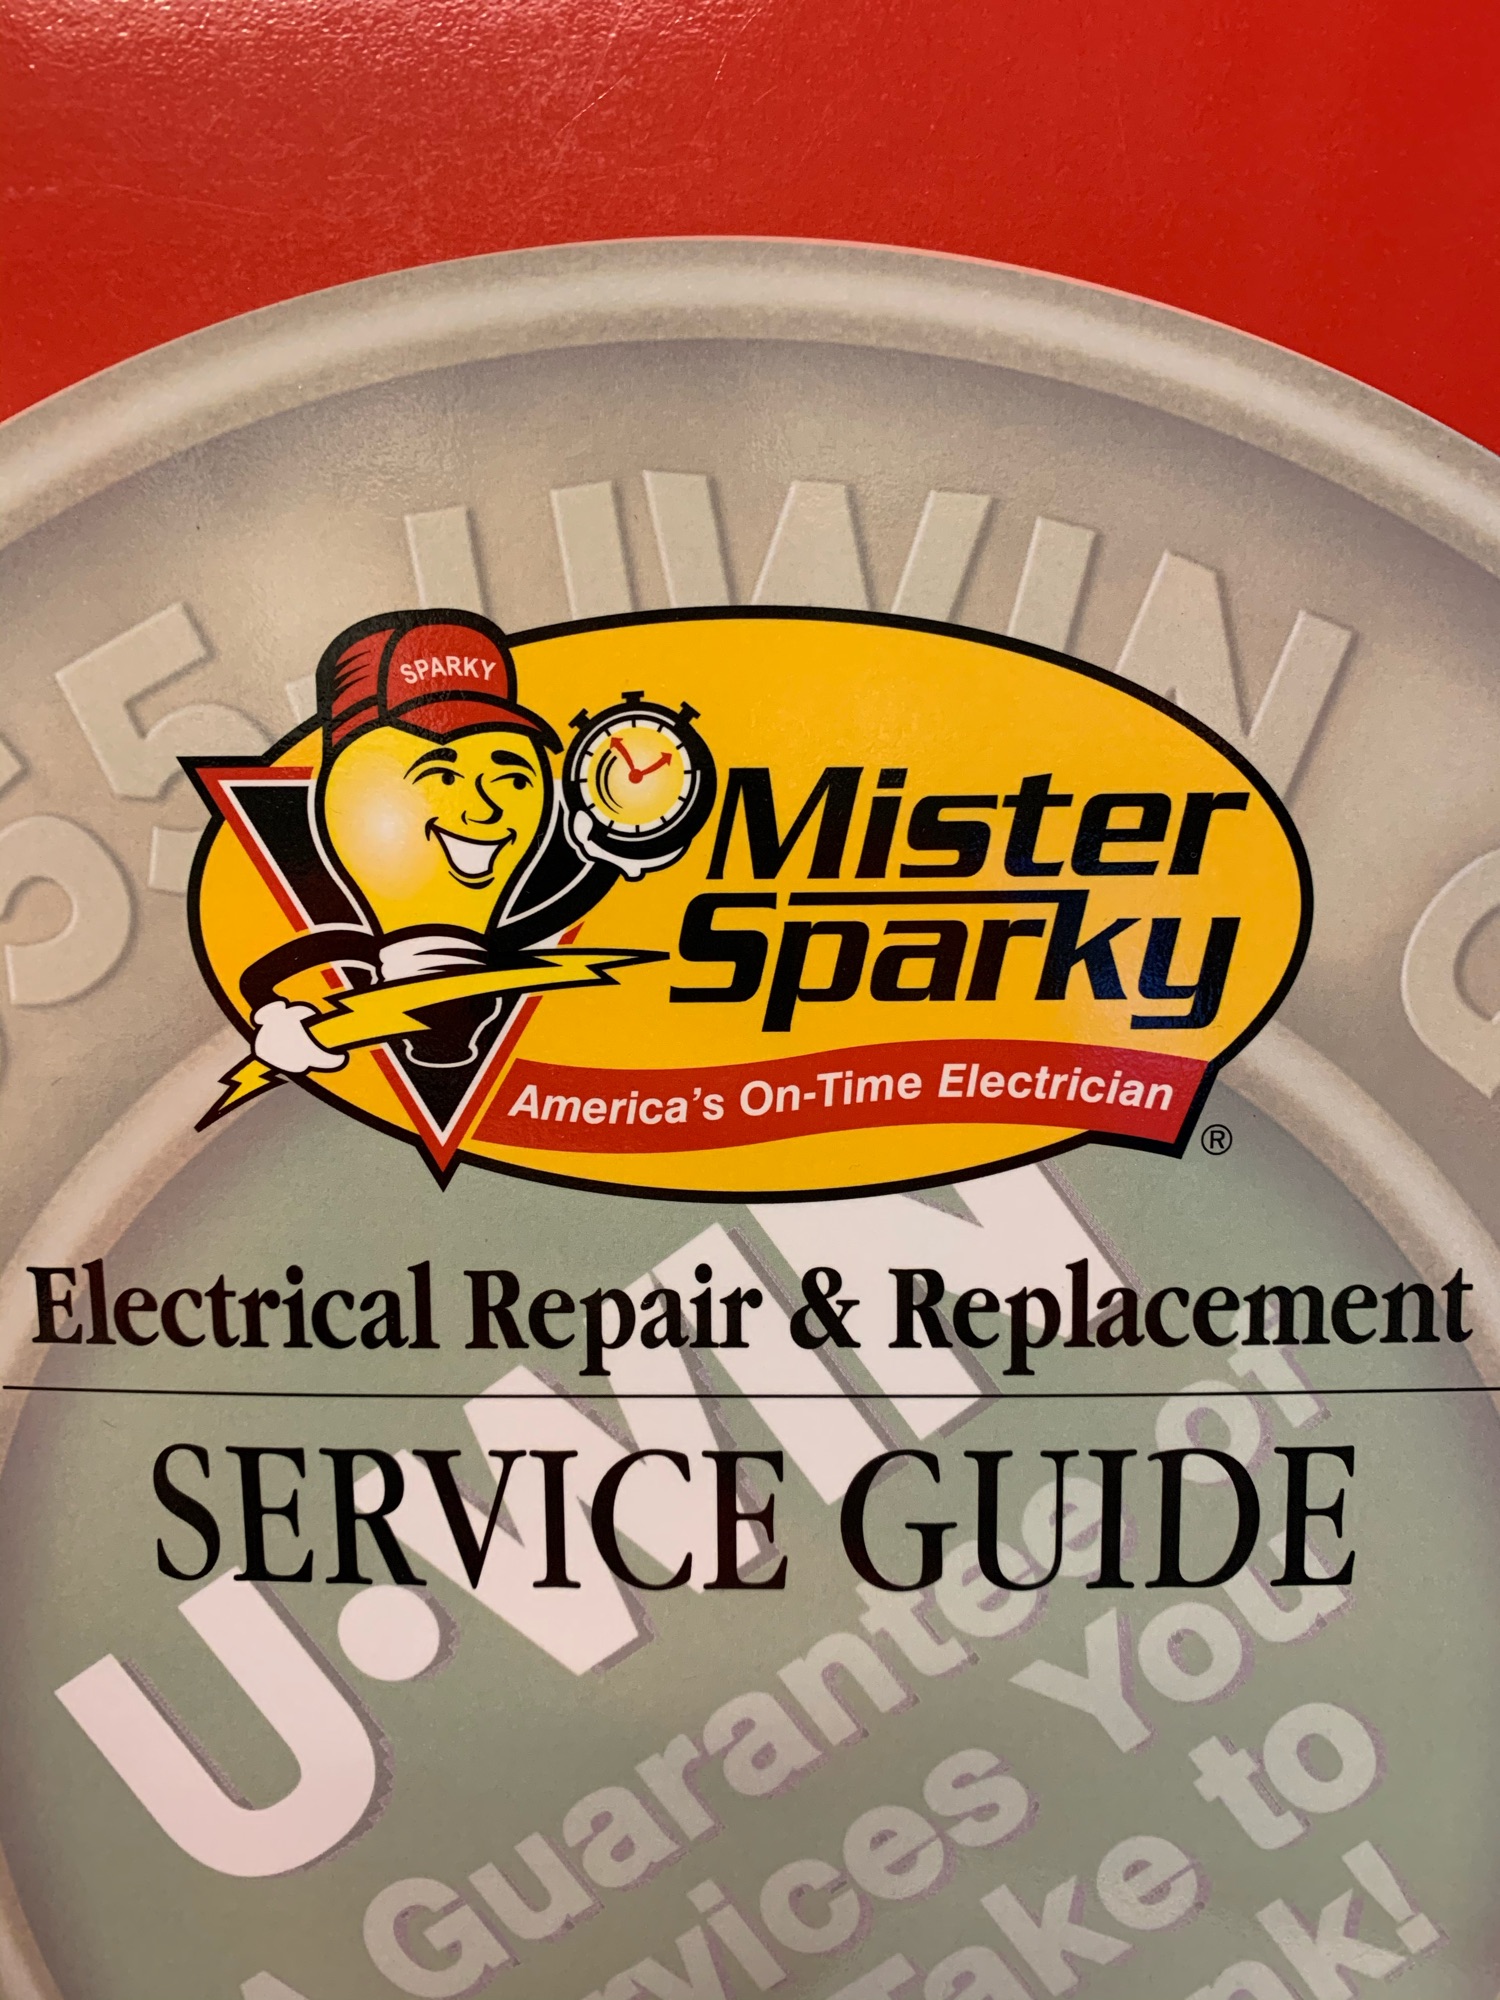 Mister Sparky Logo